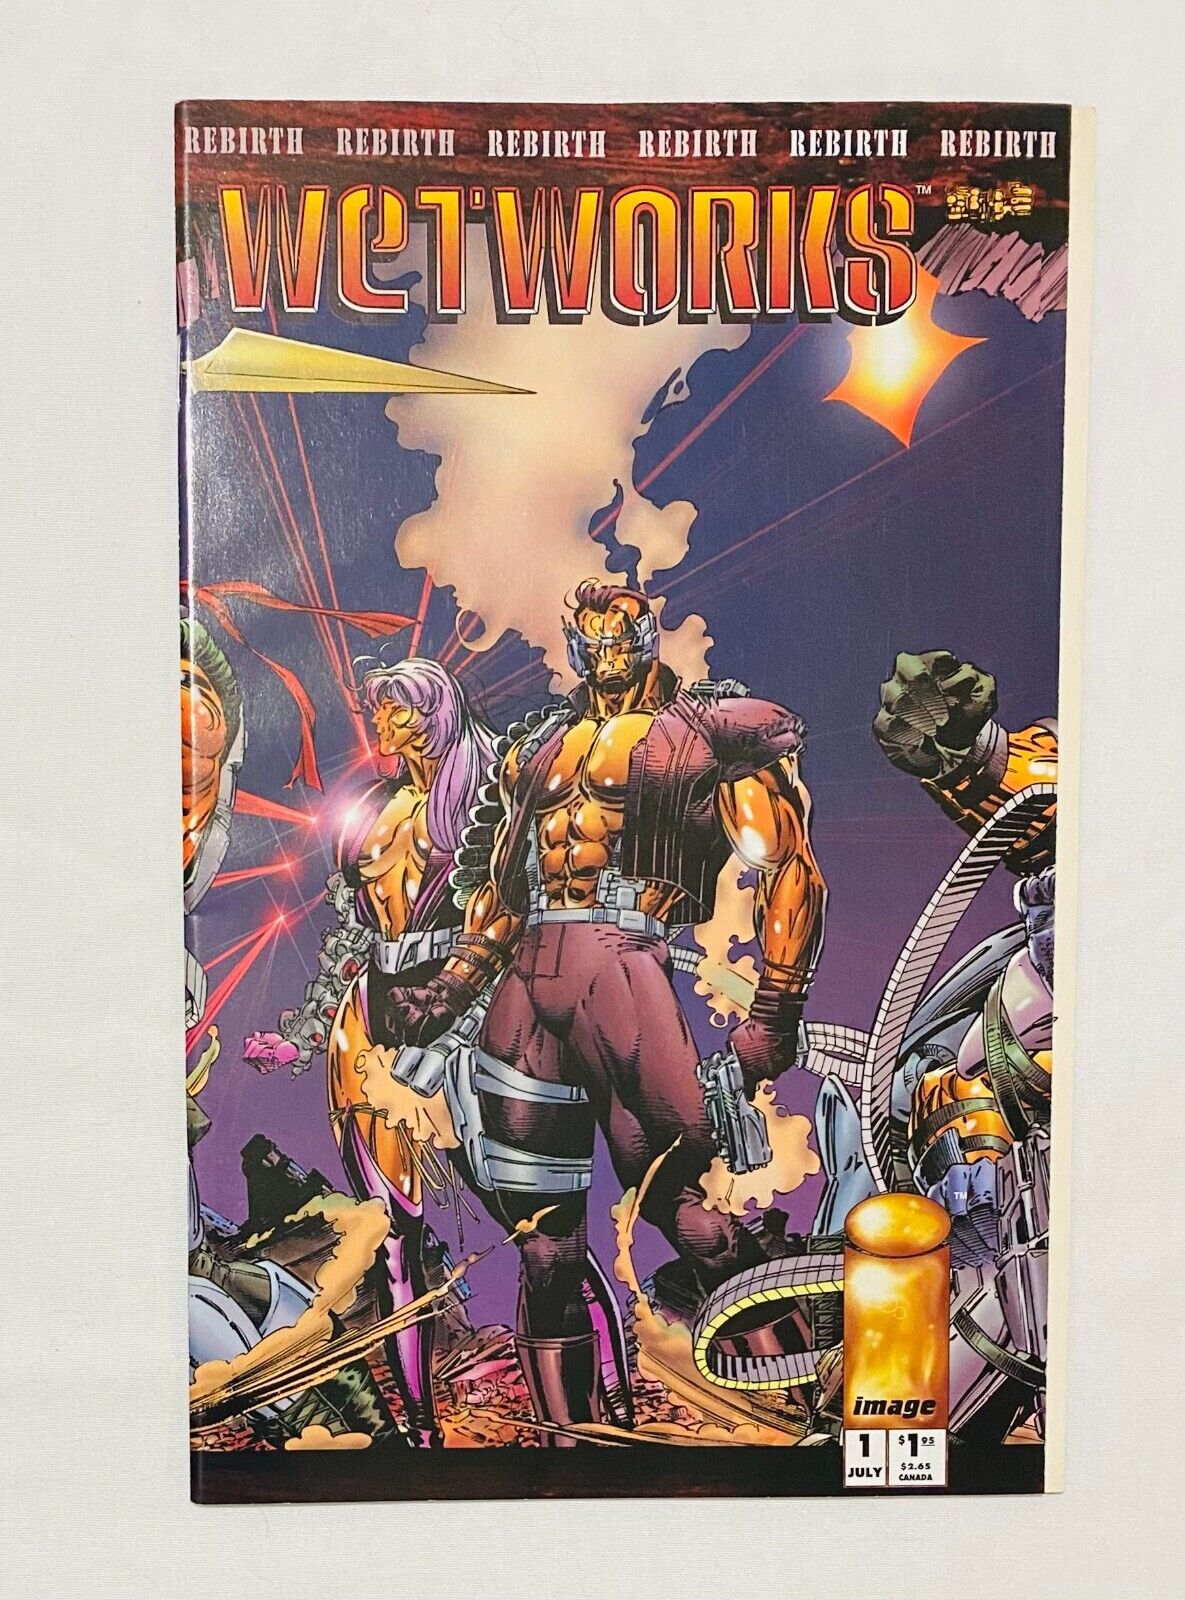 1994 Image Comics - Wetworks Rebirth #1